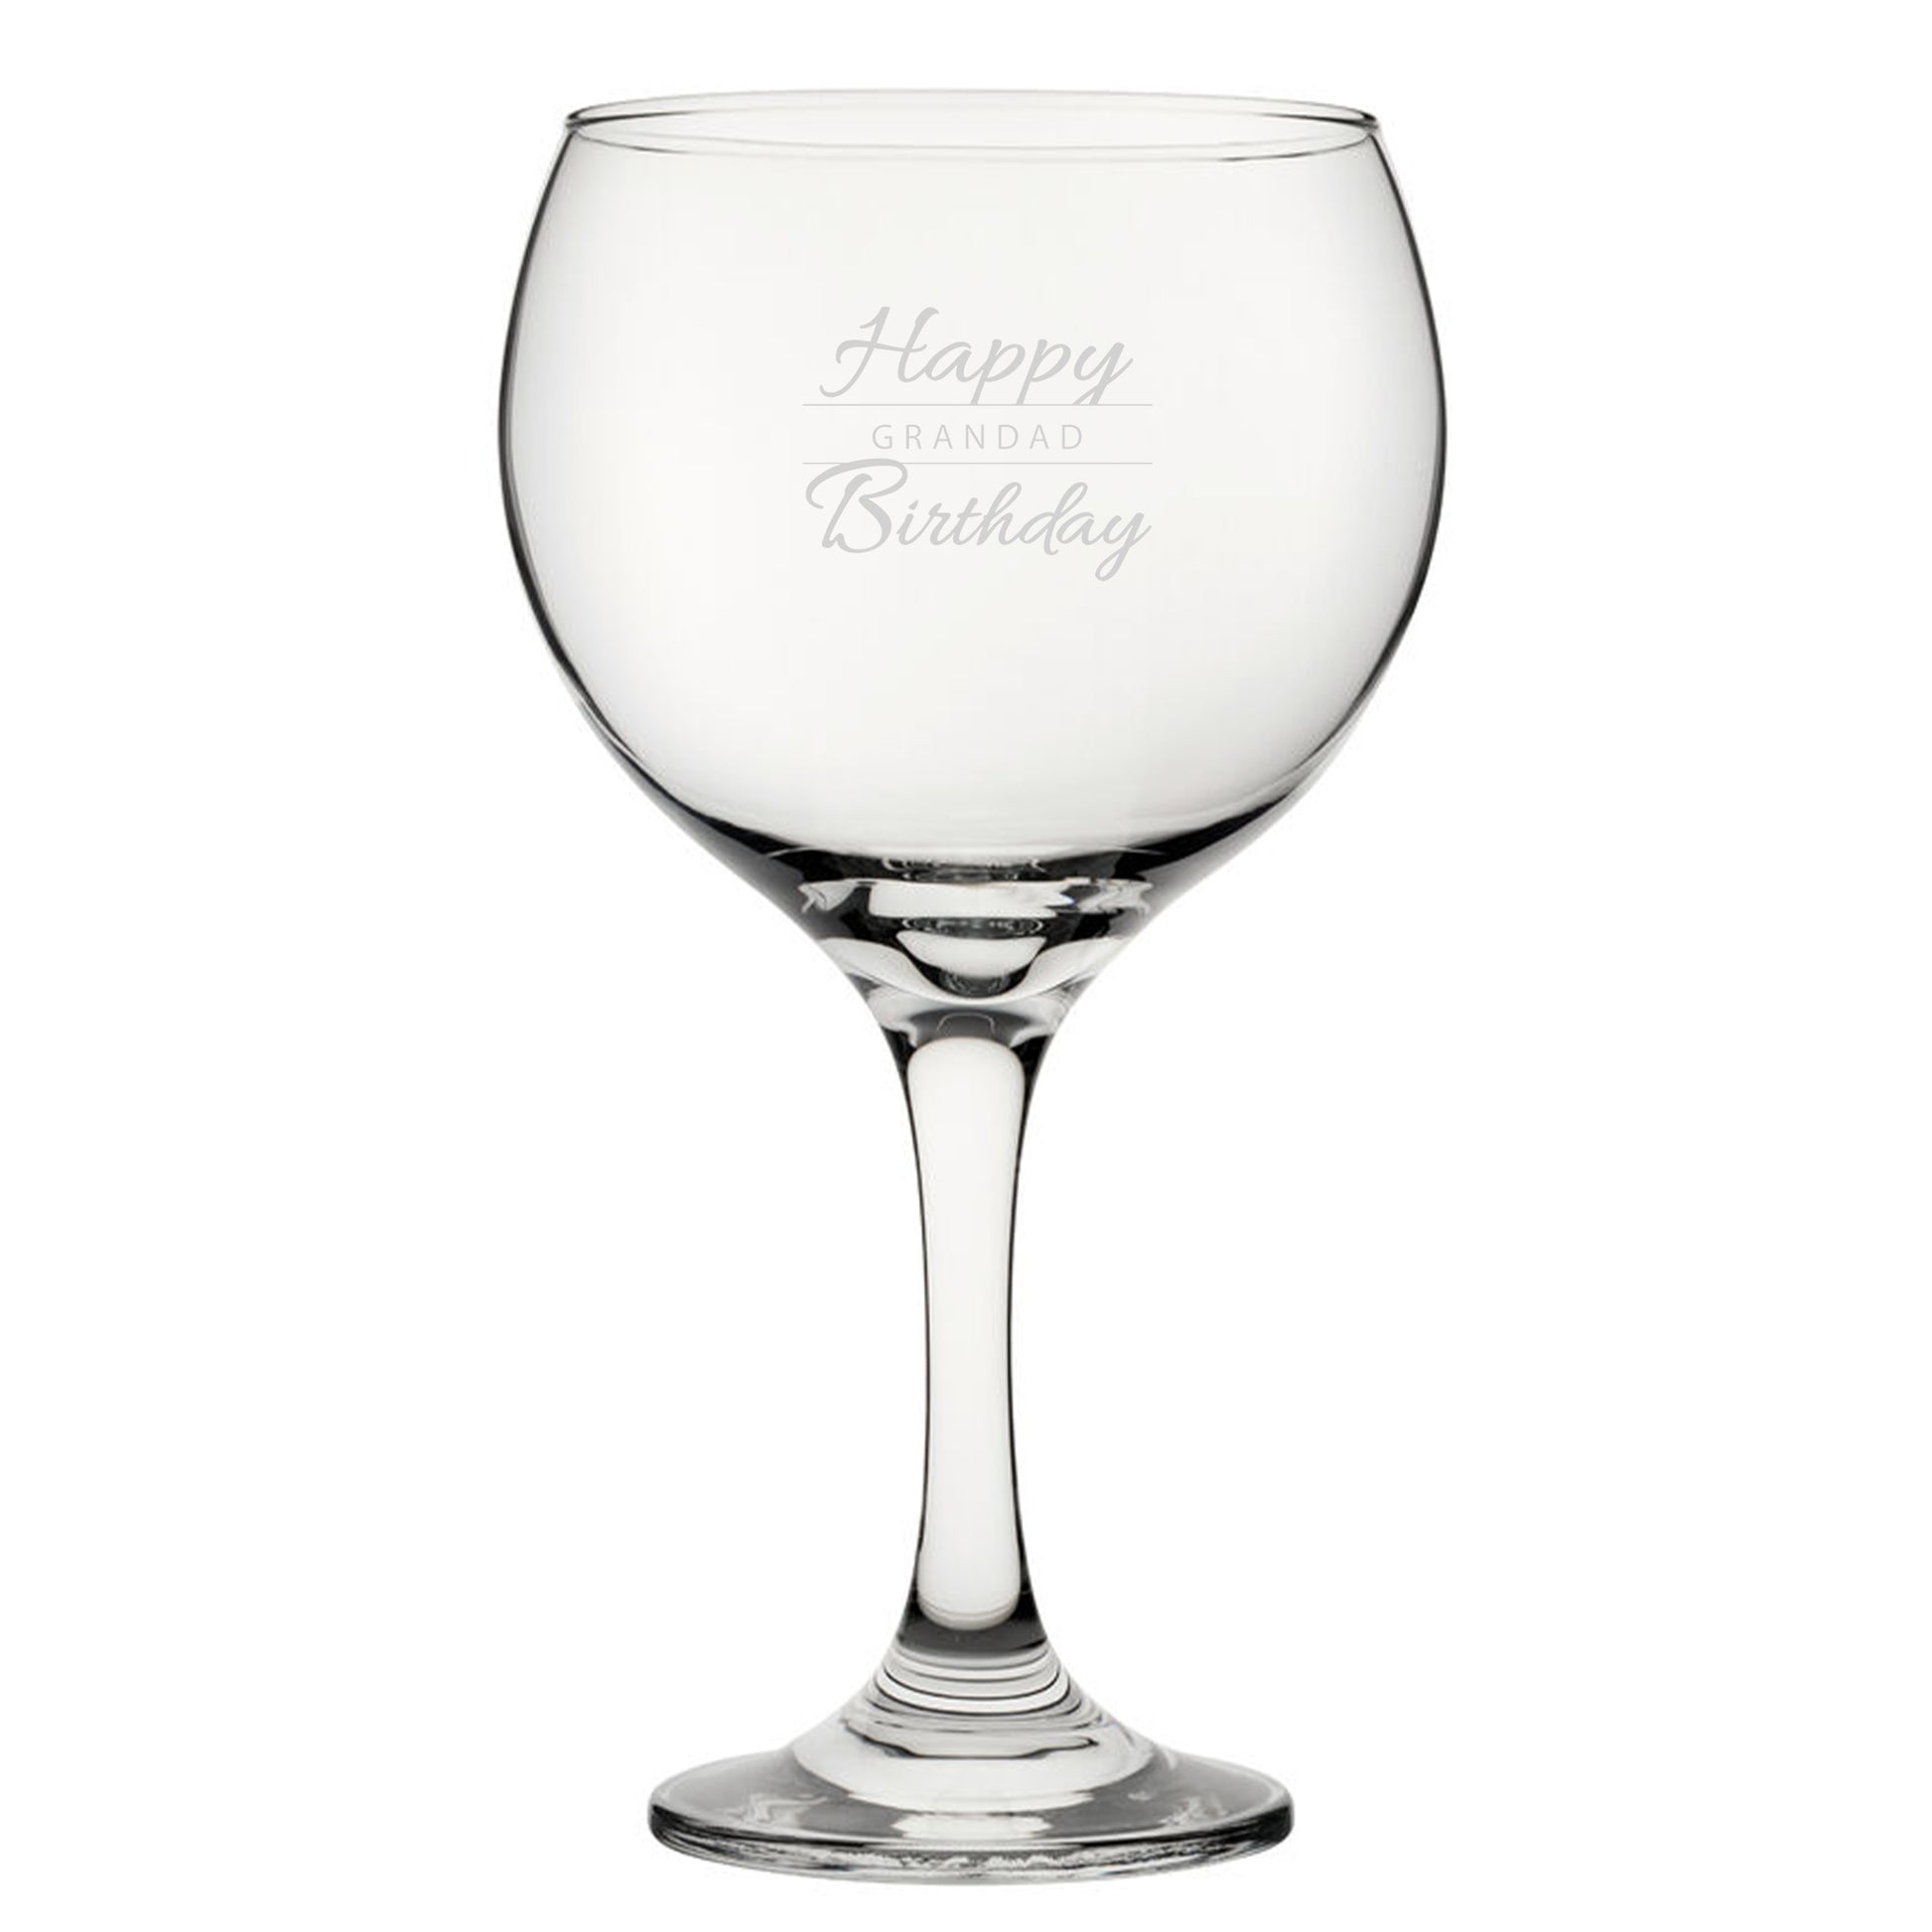 Happy Birthday Grandad Modern Design - Engraved Novelty Gin Balloon Cocktail Glass Image 1